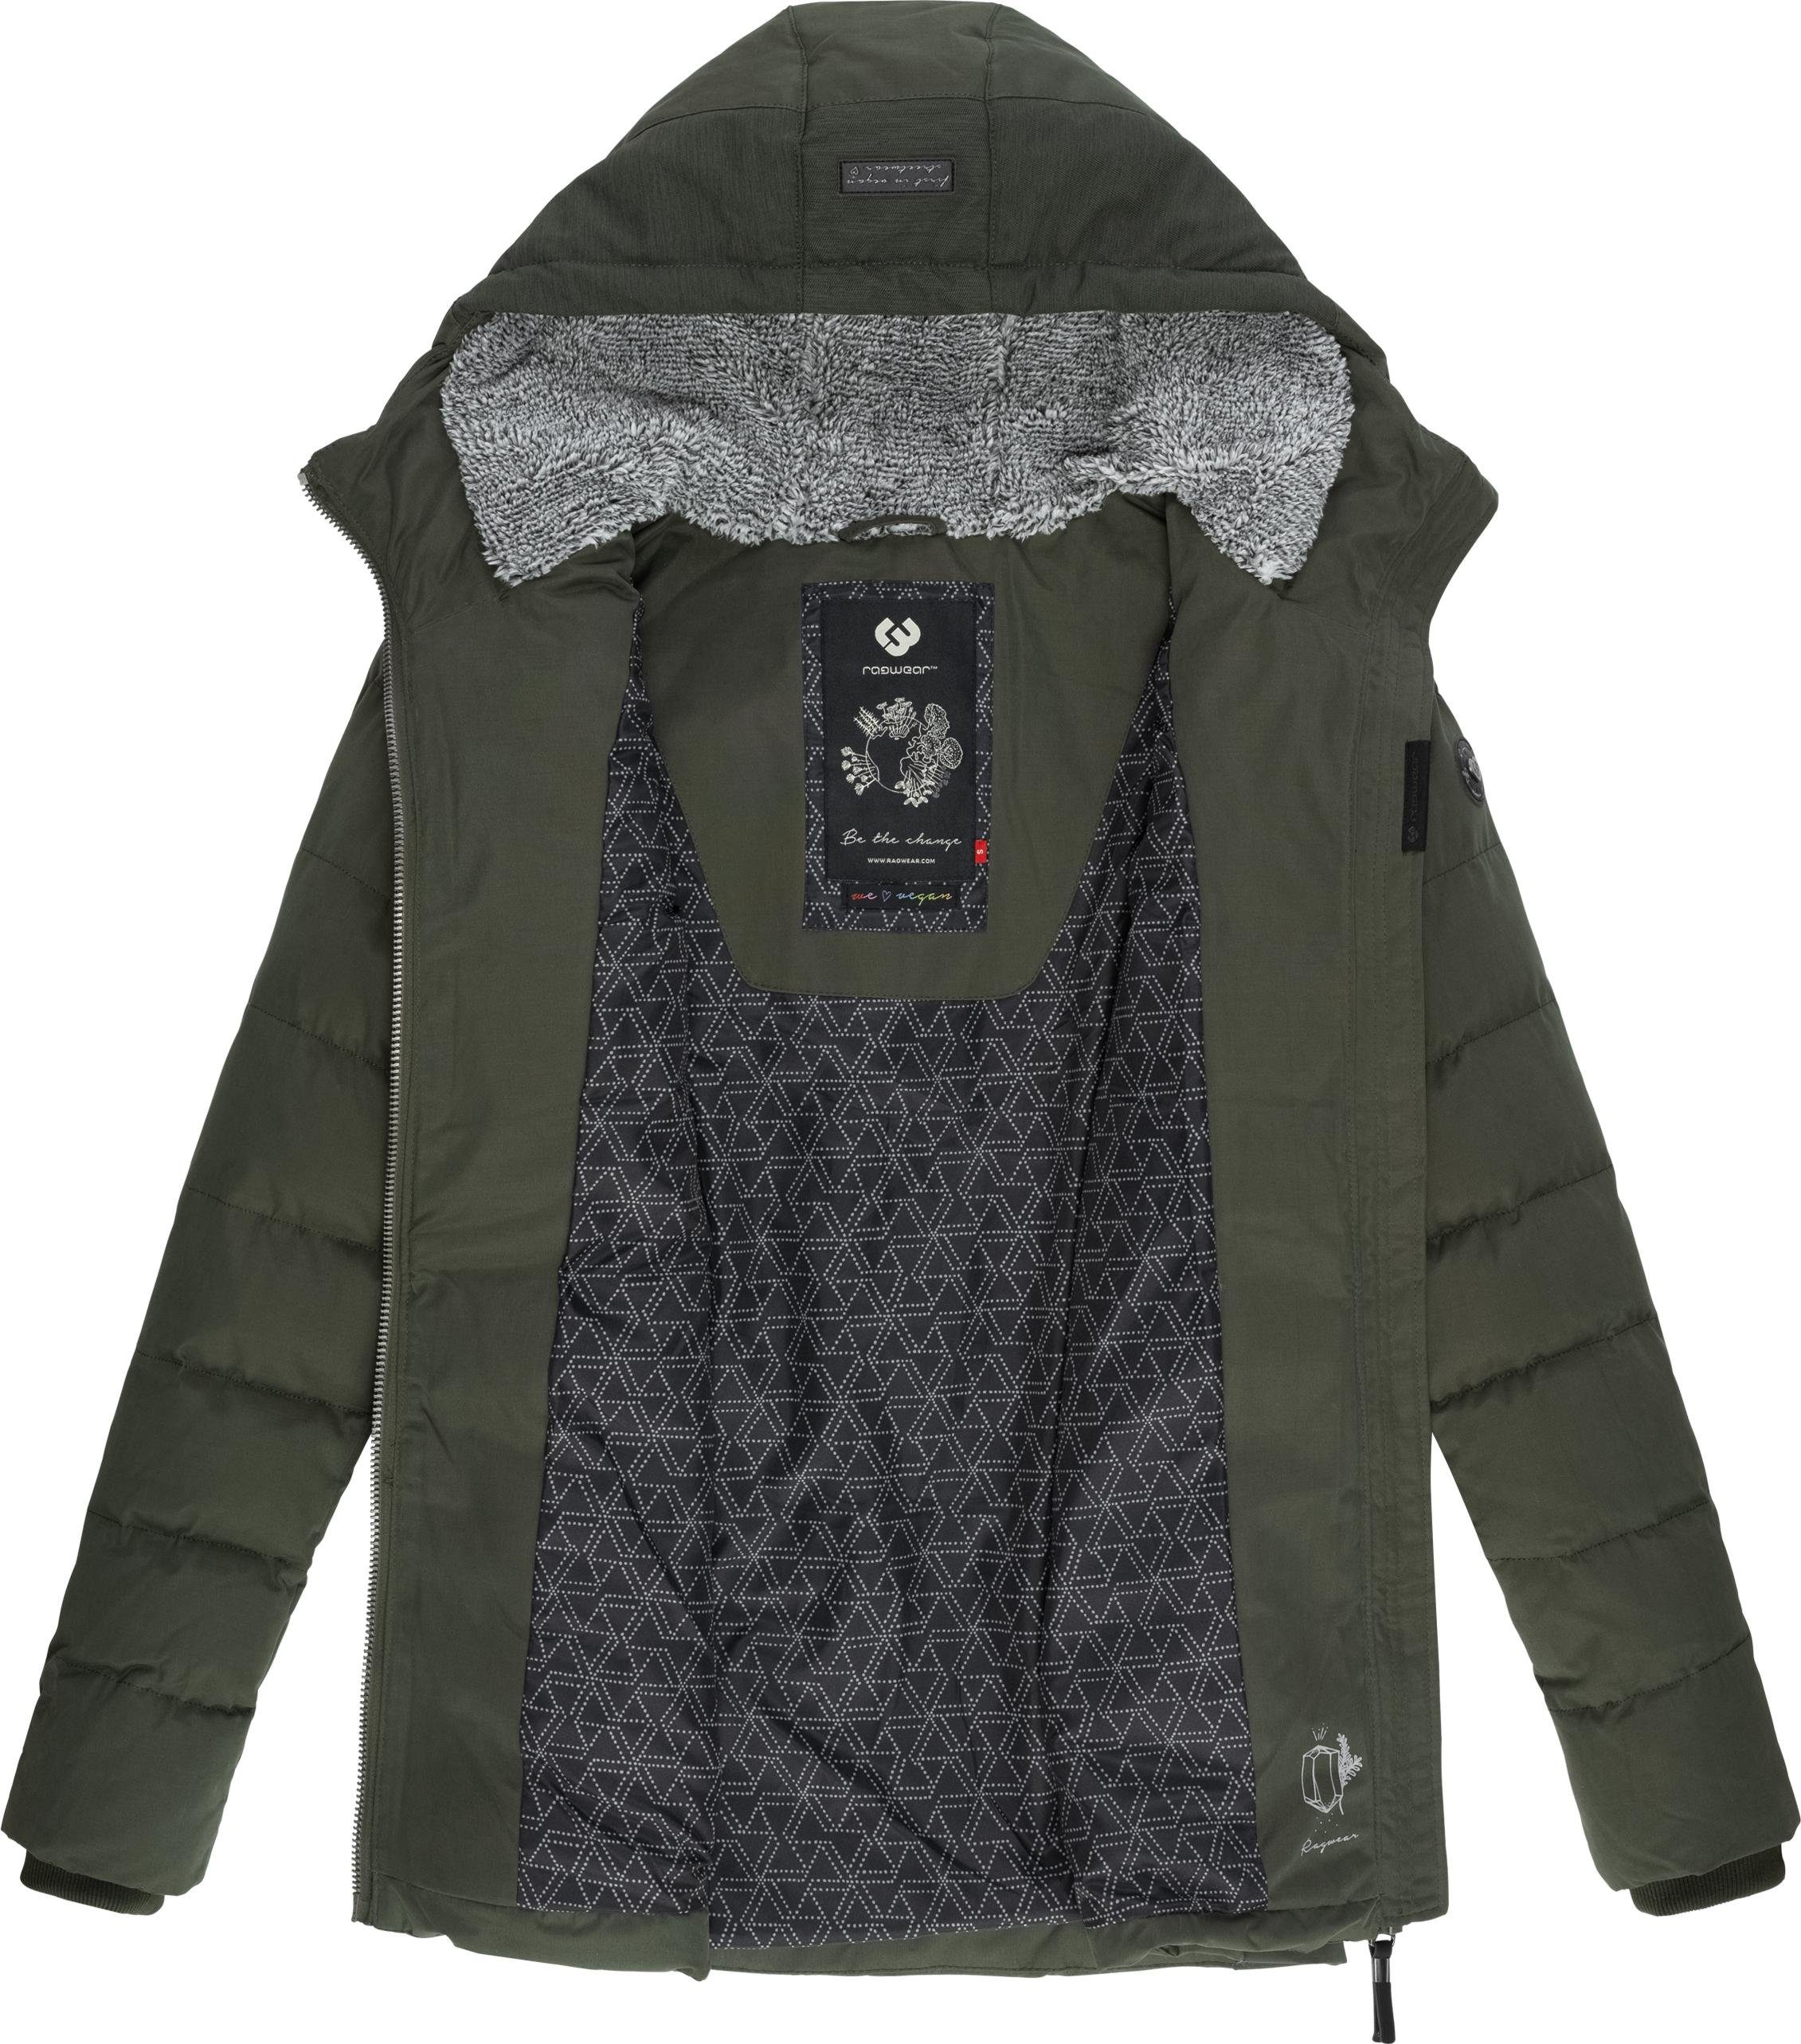 Winterjacke Quantic olivgrün Steppjacke Ragwear mit Teddyfell-Kapuze stylische